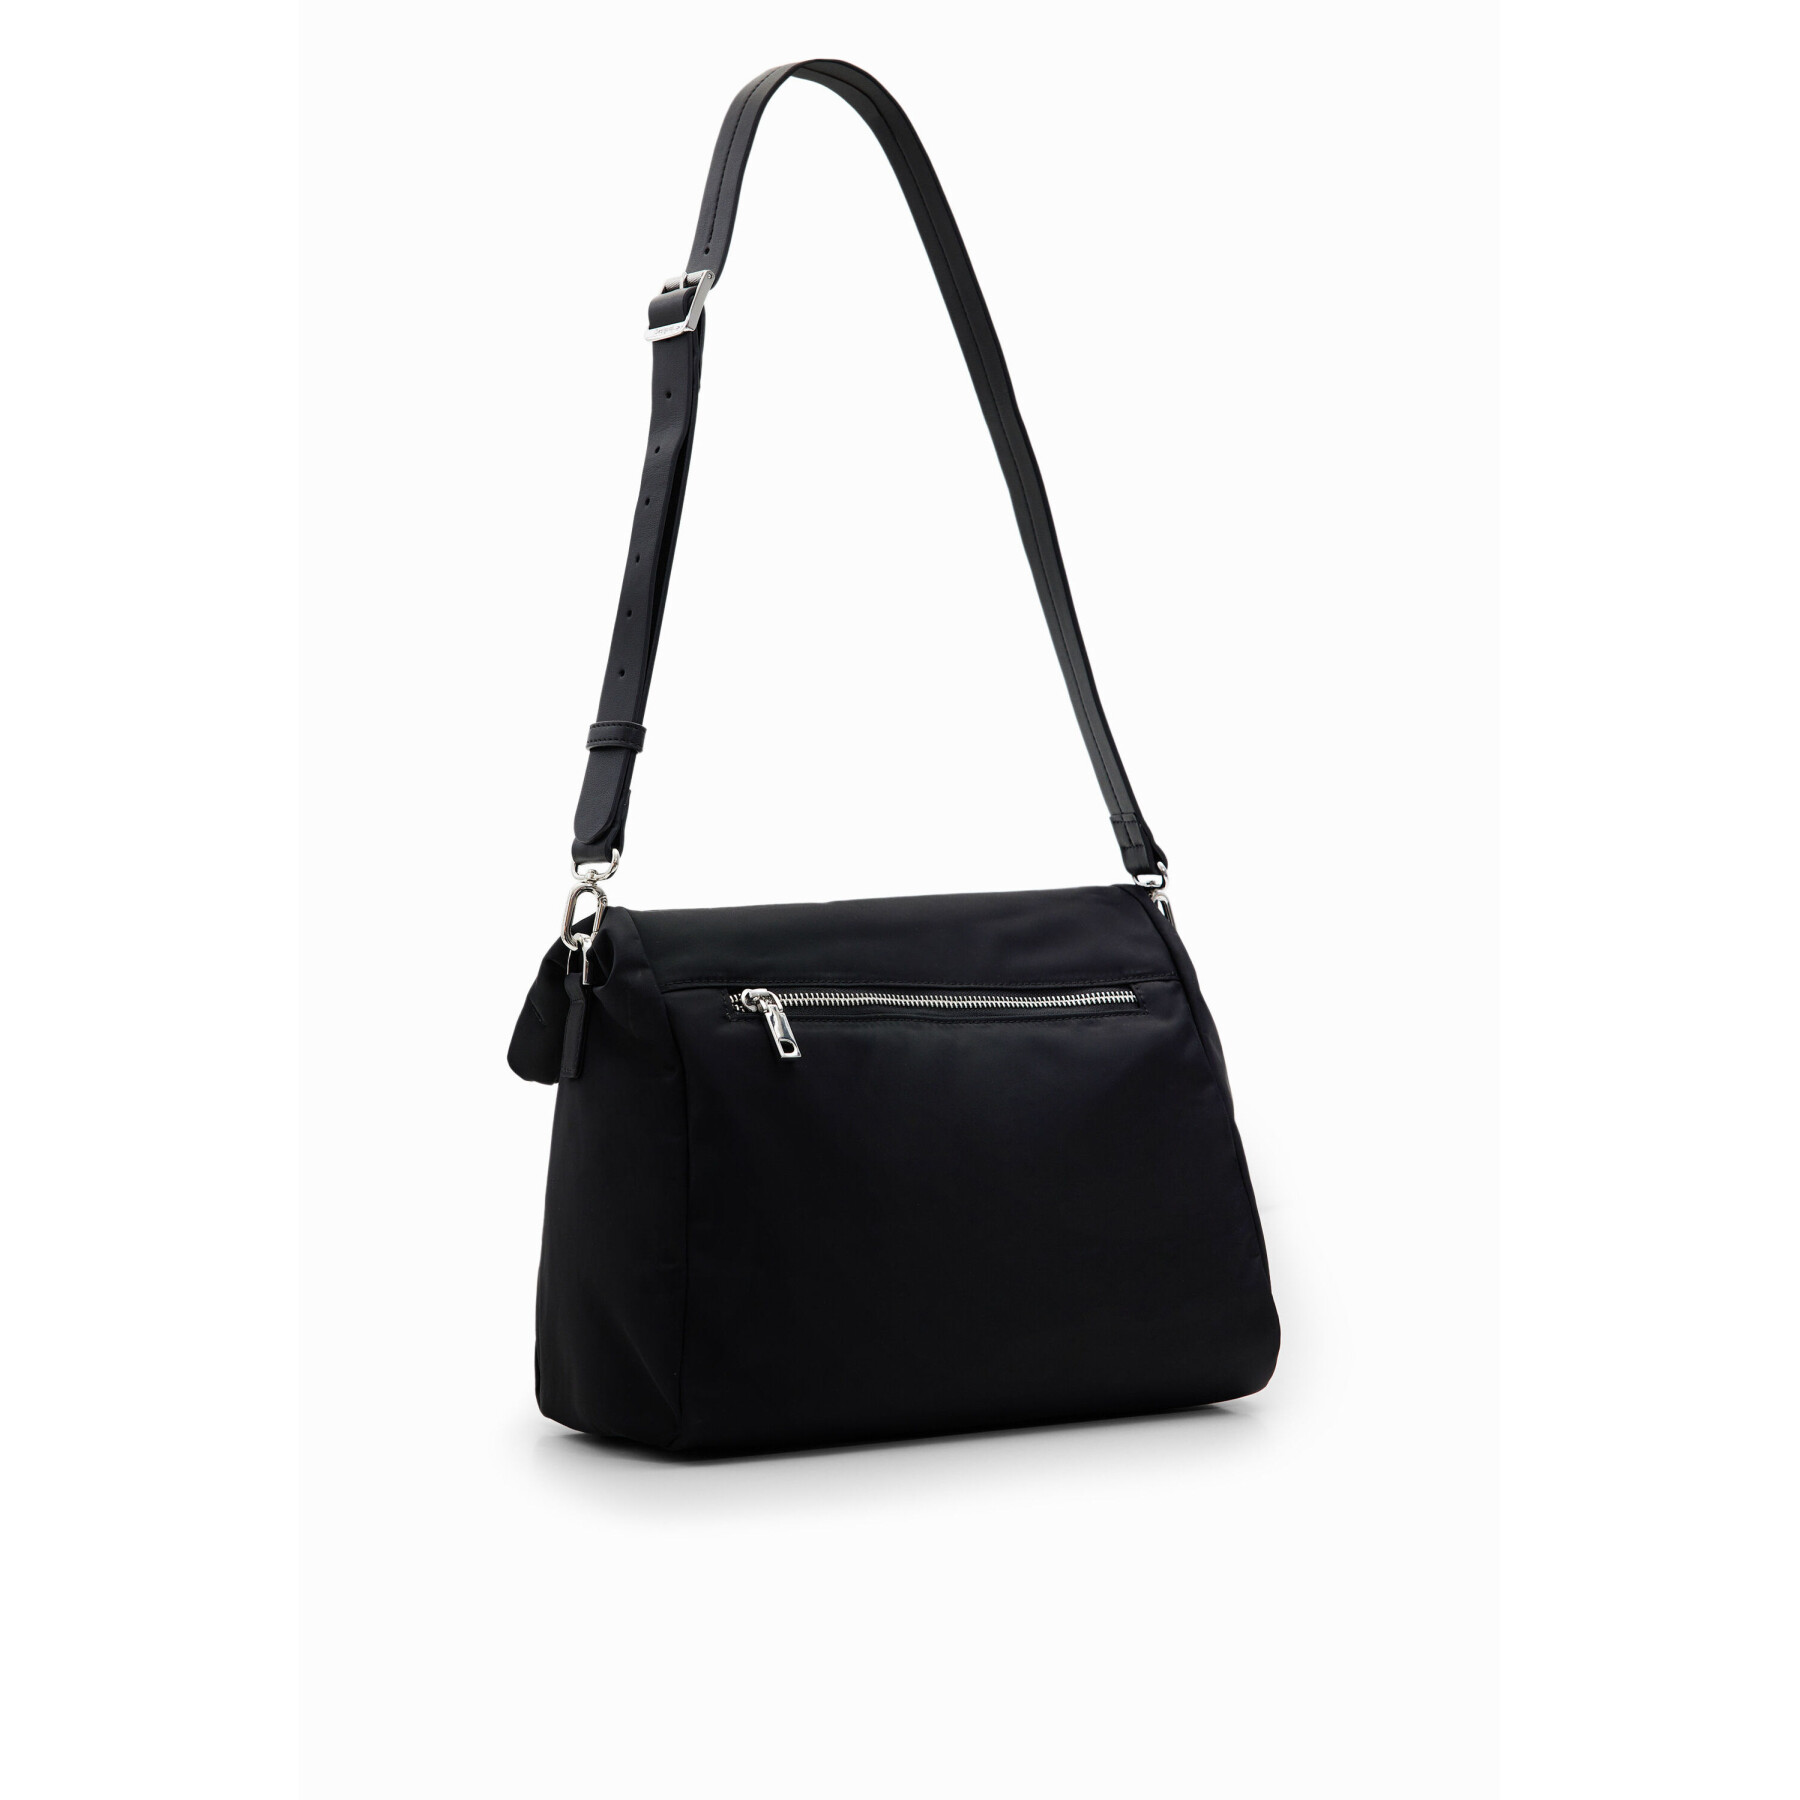 Women's handbag Desigual Priori Loverty 3.0